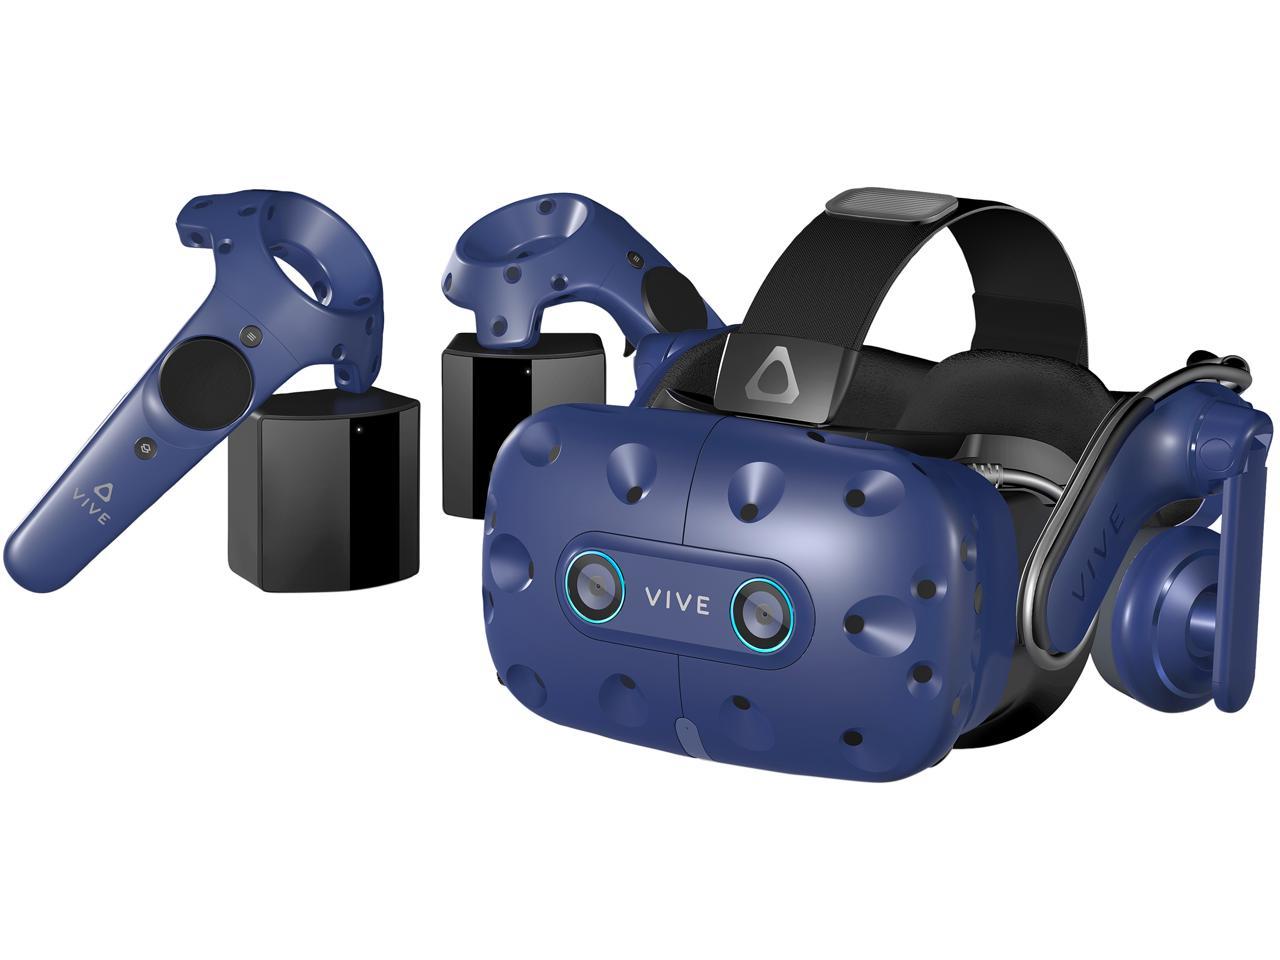 HTC VIVE Pro Eye Virtual Reality System with Eye Tracking